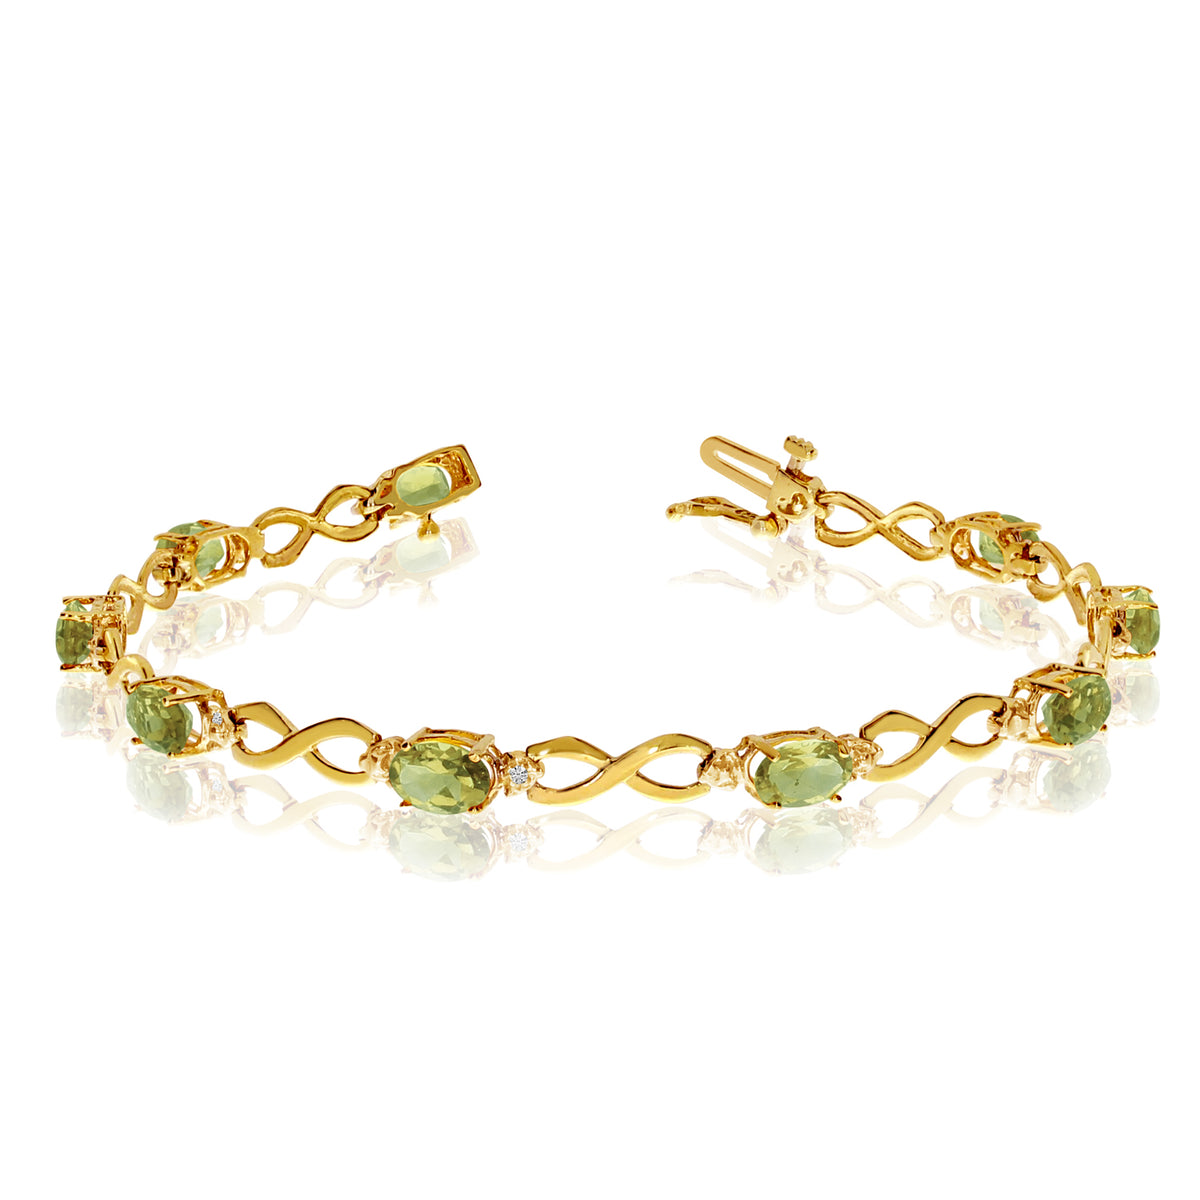 10K Yellow Gold Oval Peridot Stones And Diamonds Infinity Tennis Bracelet, 7" fine designer jewelry for men and women